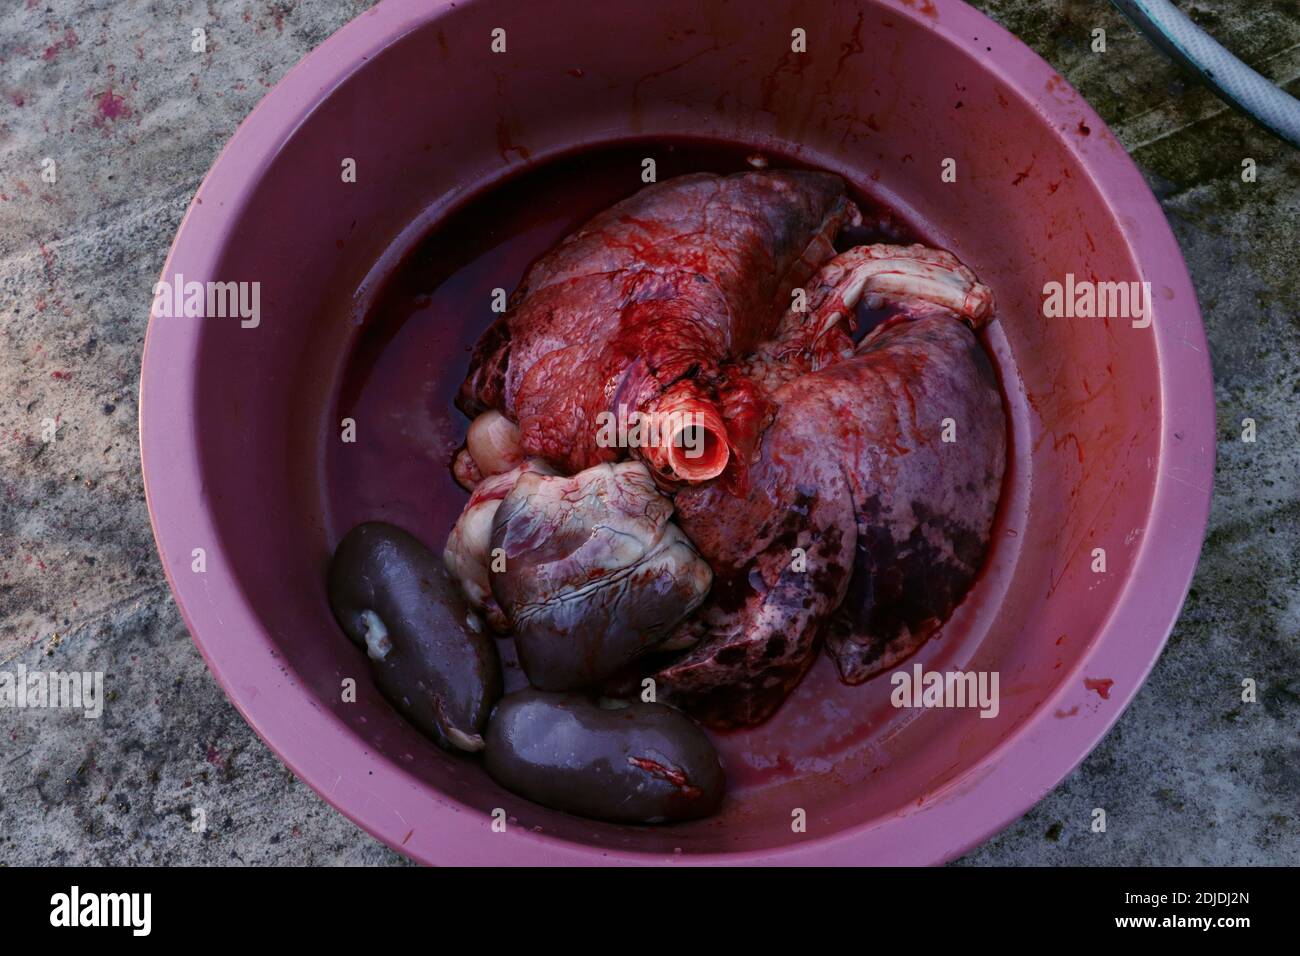 Pig's internal organs Stock Photo